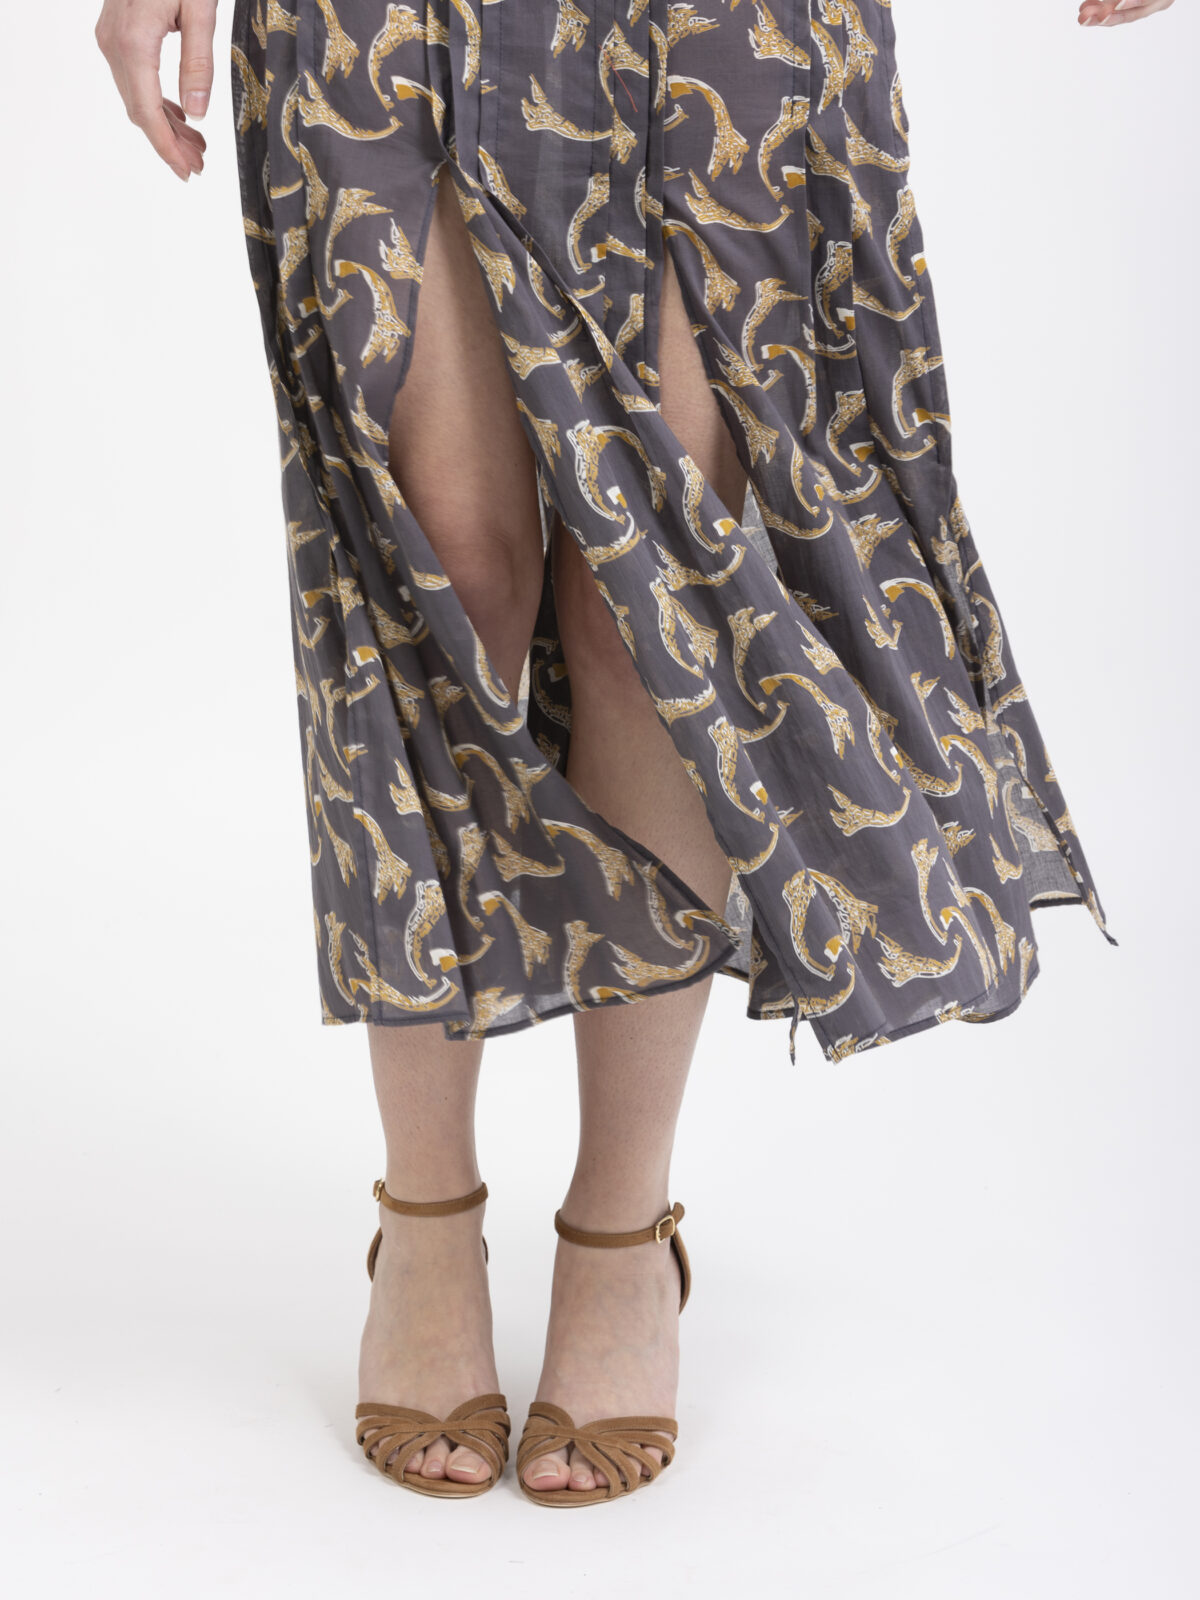 abel-skirt-voile-cotton-print-giraffes-maxi-greek-designers-kimale-matchboxathens